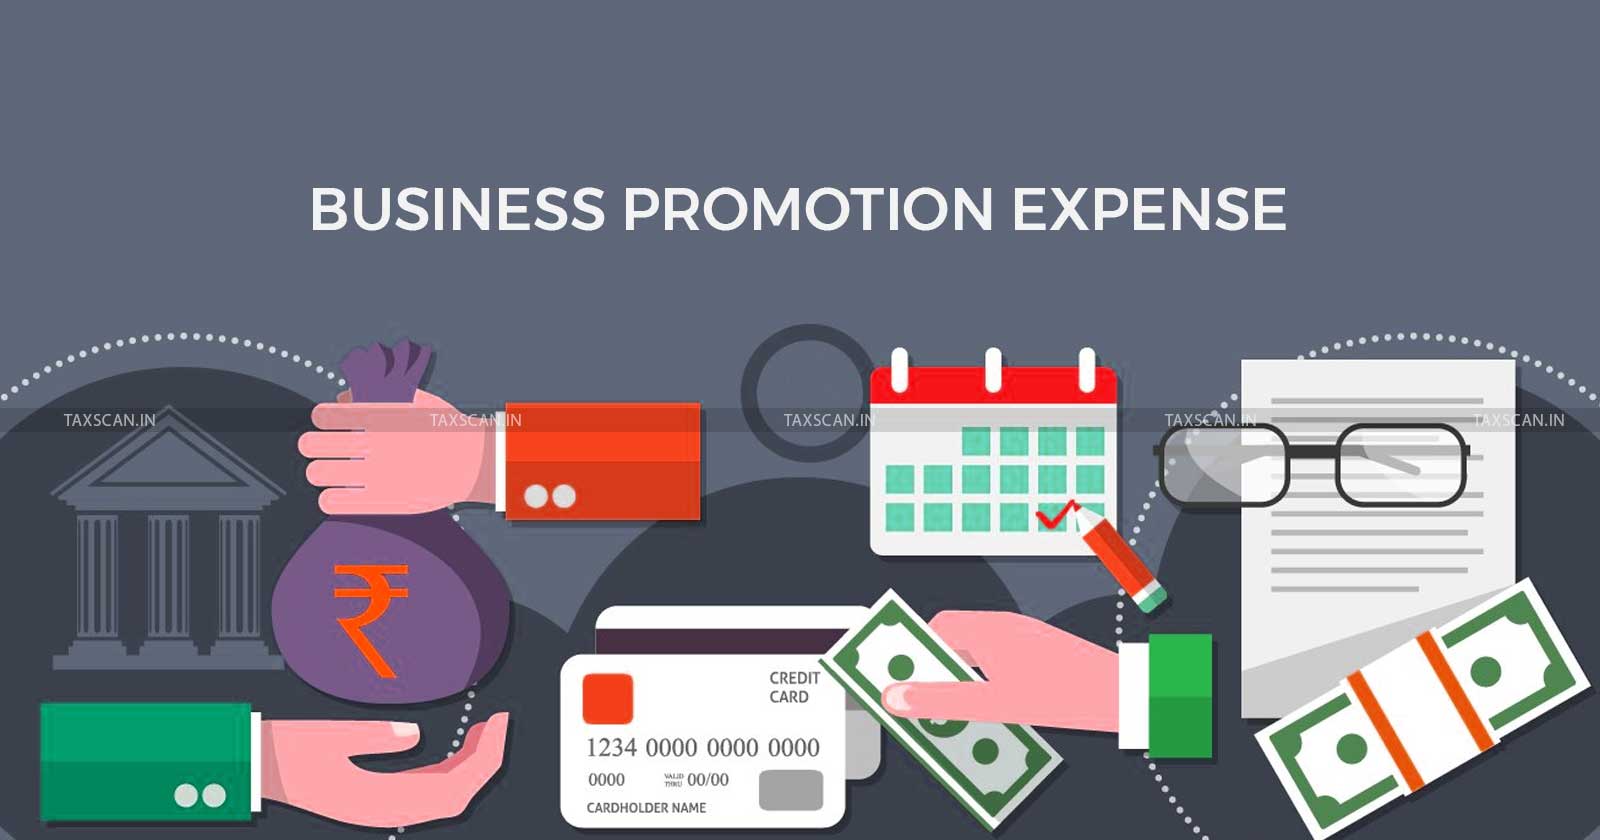 ITAT - ITAT Mumbai - Income Tax - Business Promotion Expenses - TAXSCAN